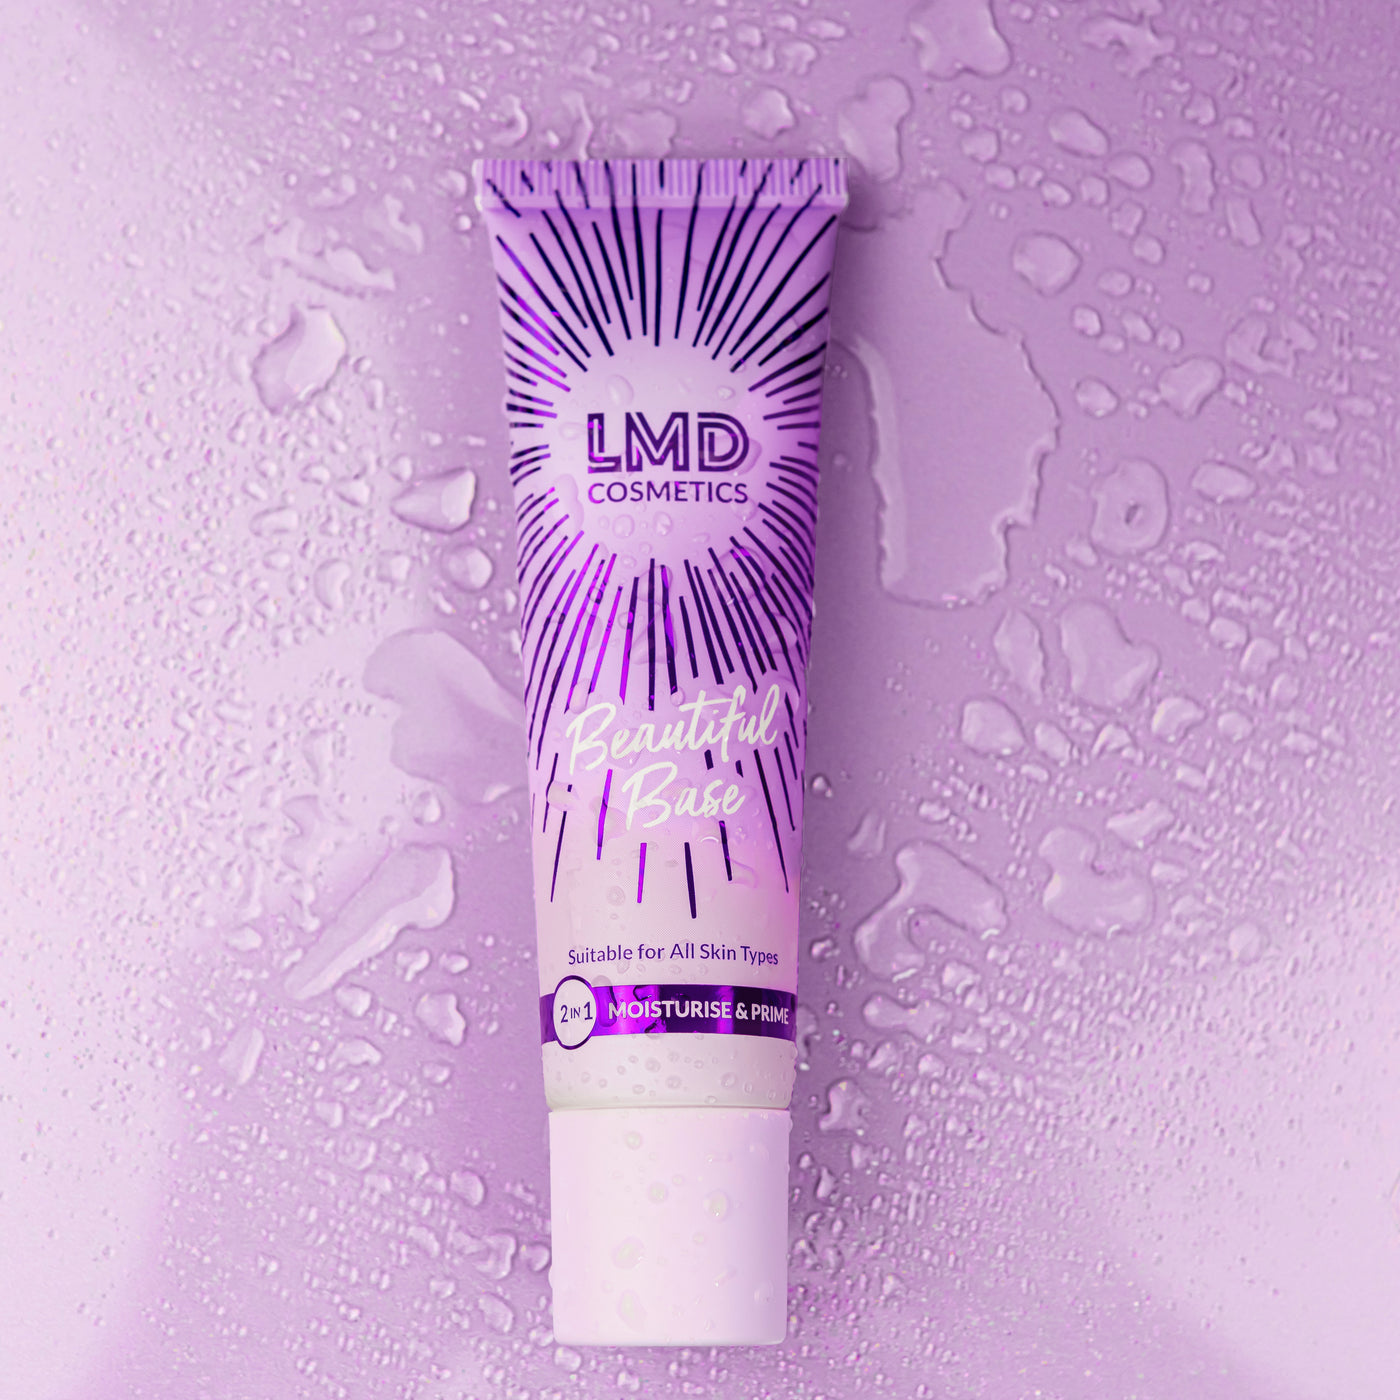 LMD Cosmetics - Beautiful Base